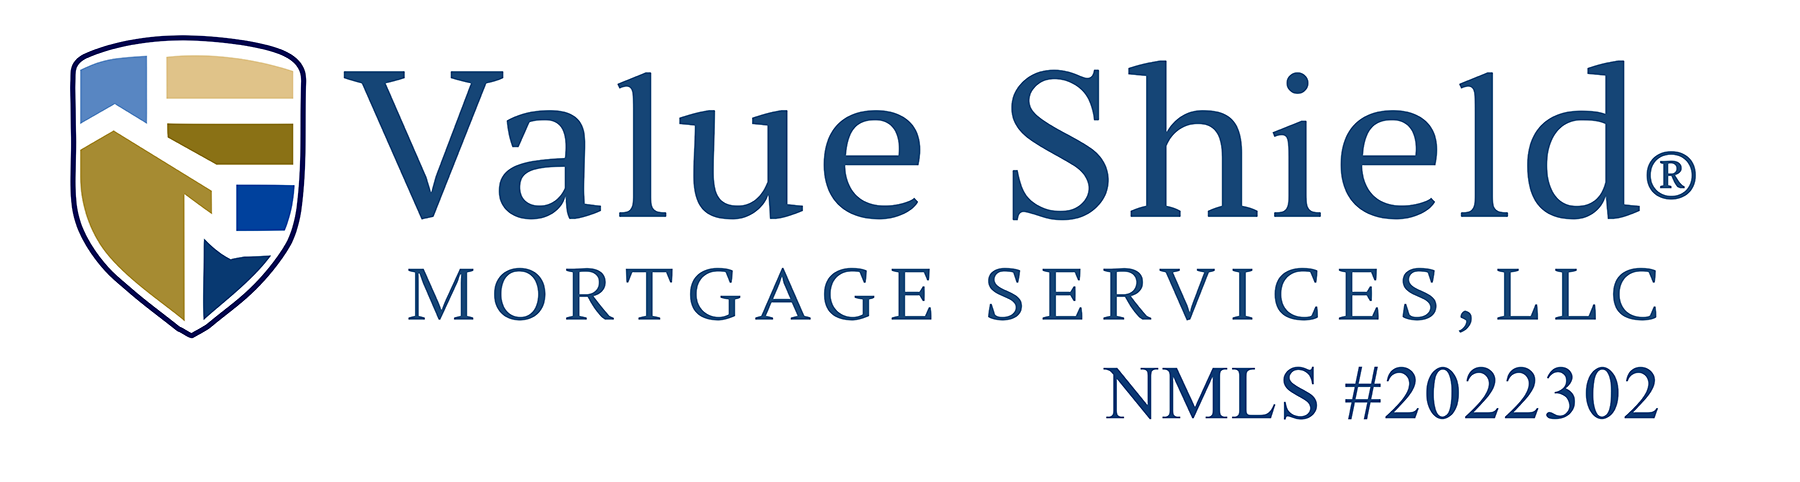 Value Shield Mortgage Services, LLC logo